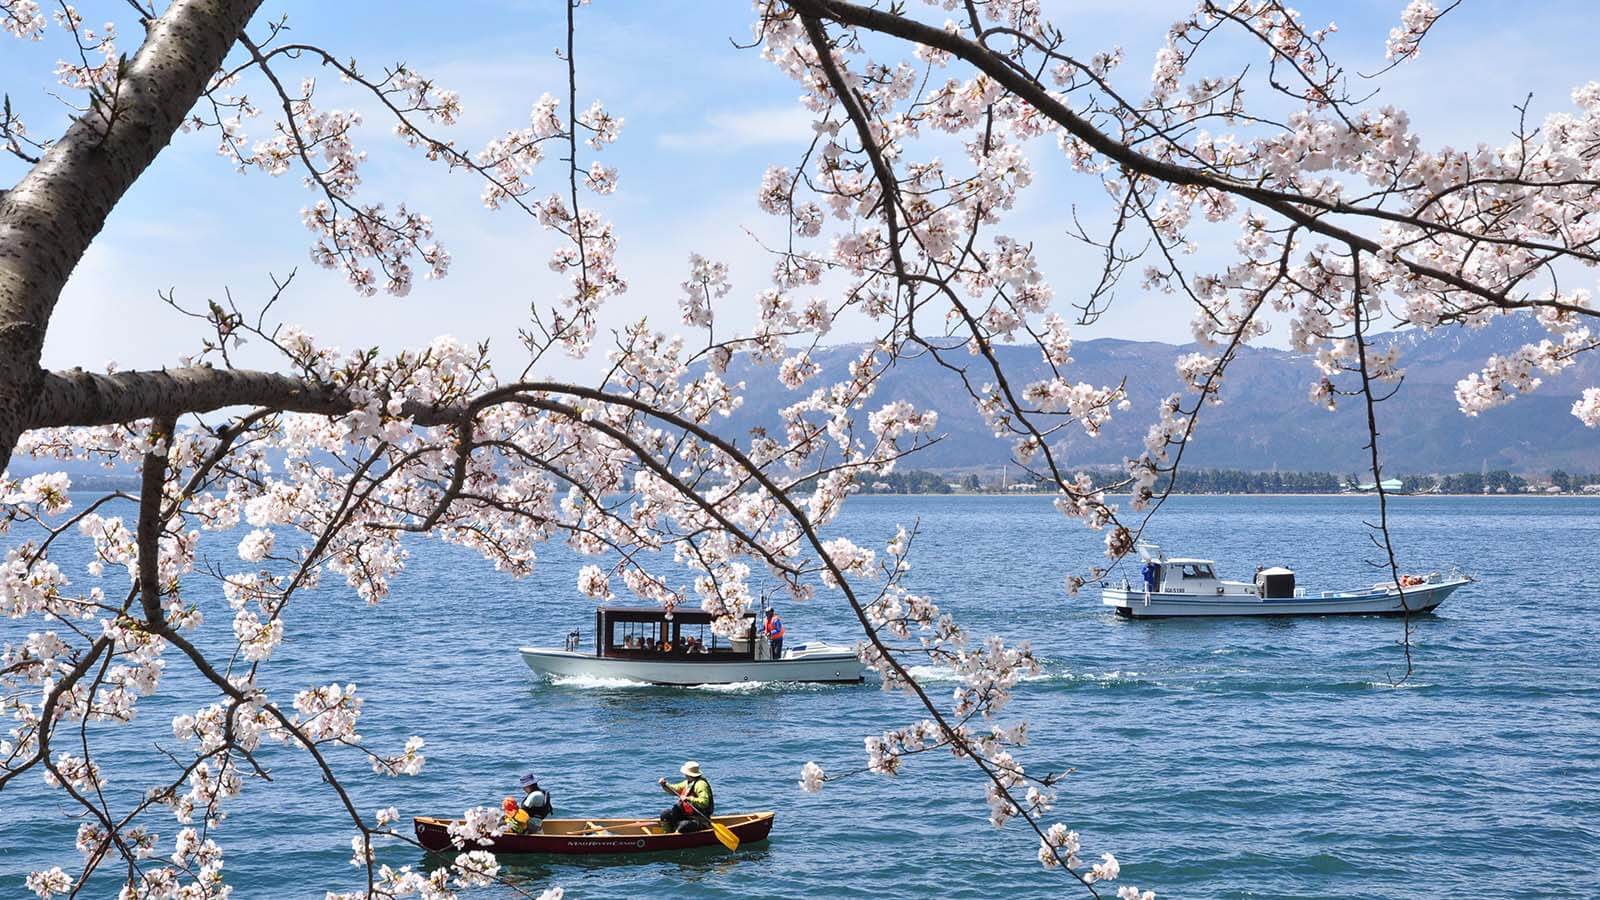 Cherry blossoms at Kaizu